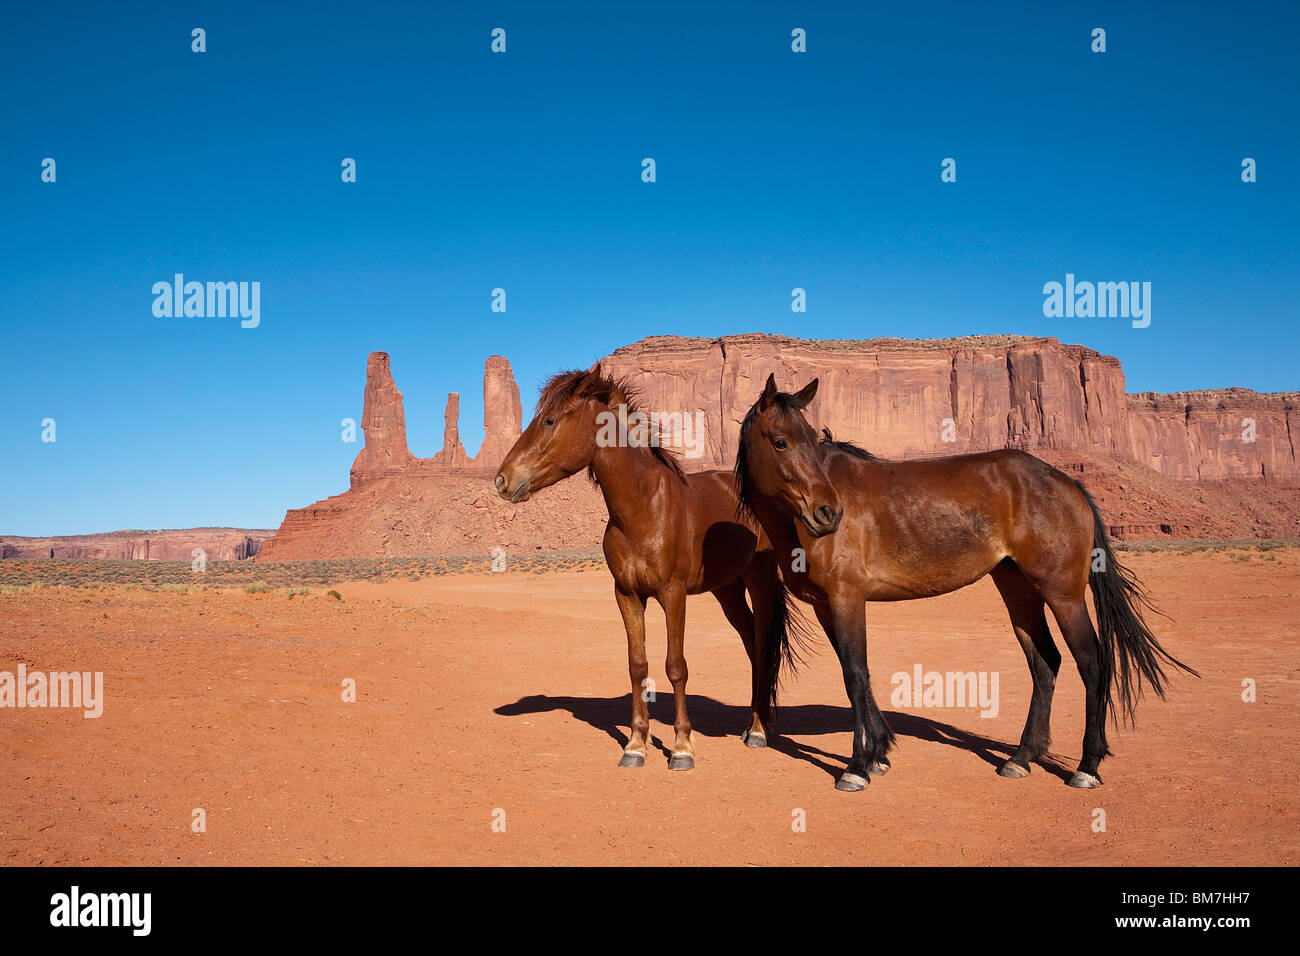 Zwei wilde Pferde, Monument Valley Navajo Tribal Park, Monument Valley, Arizona, USA Stockfoto